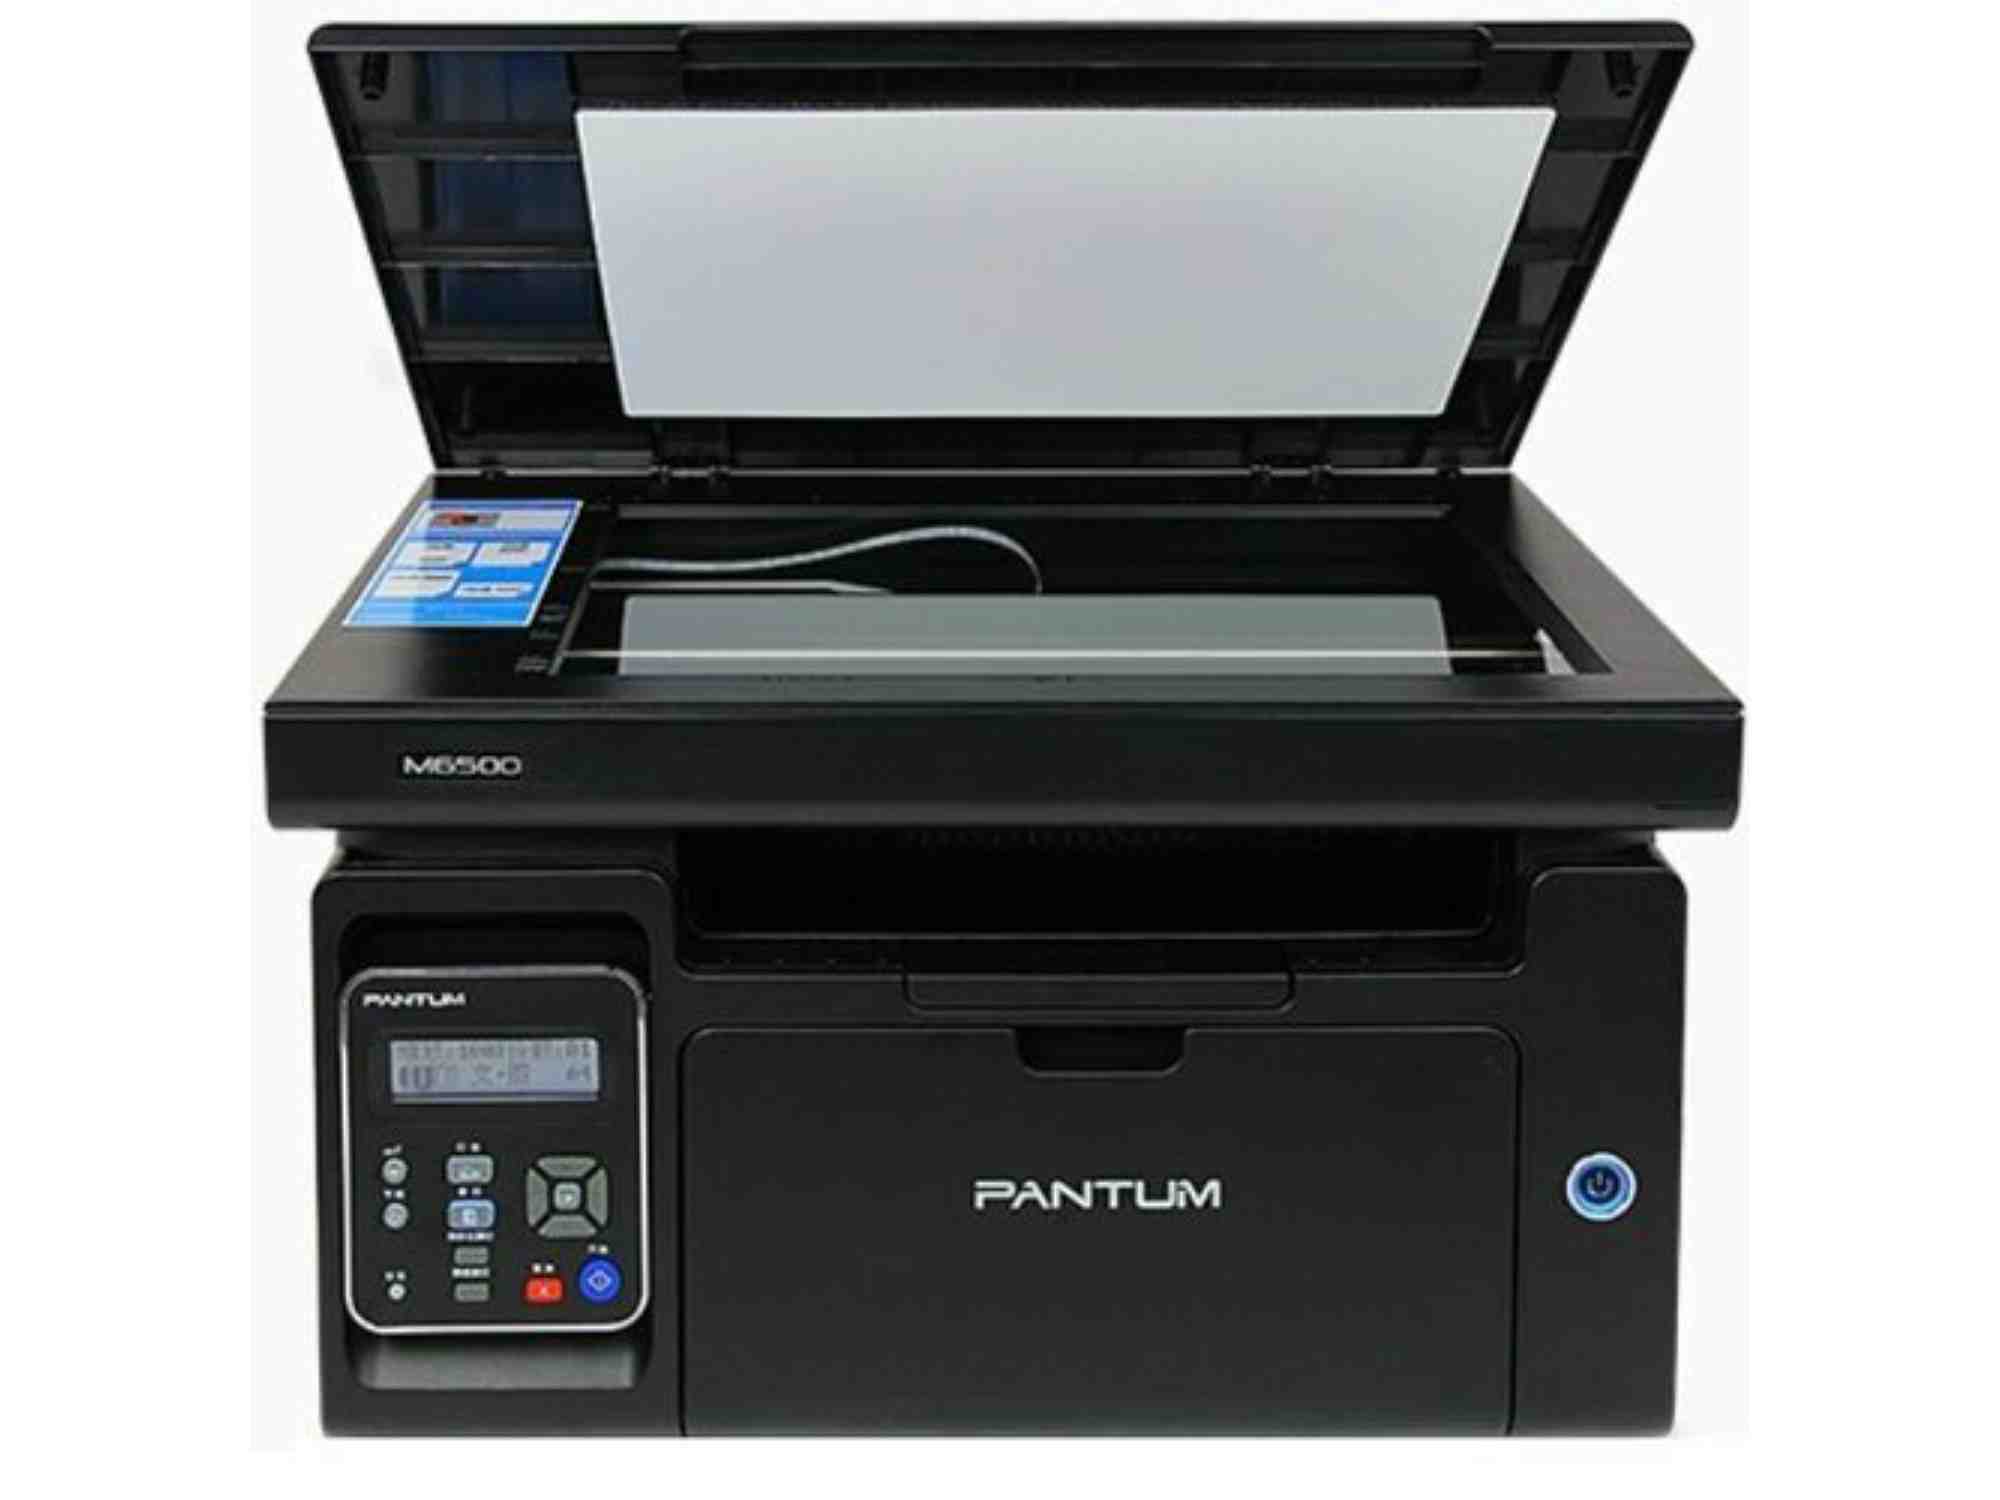 Pantum m6500 series драйвер. МФУ Pantum m6500. Лазерный принтер Pantum m6500. Принтер Пантум 6500. МФУ лазерное Pantum m6507.